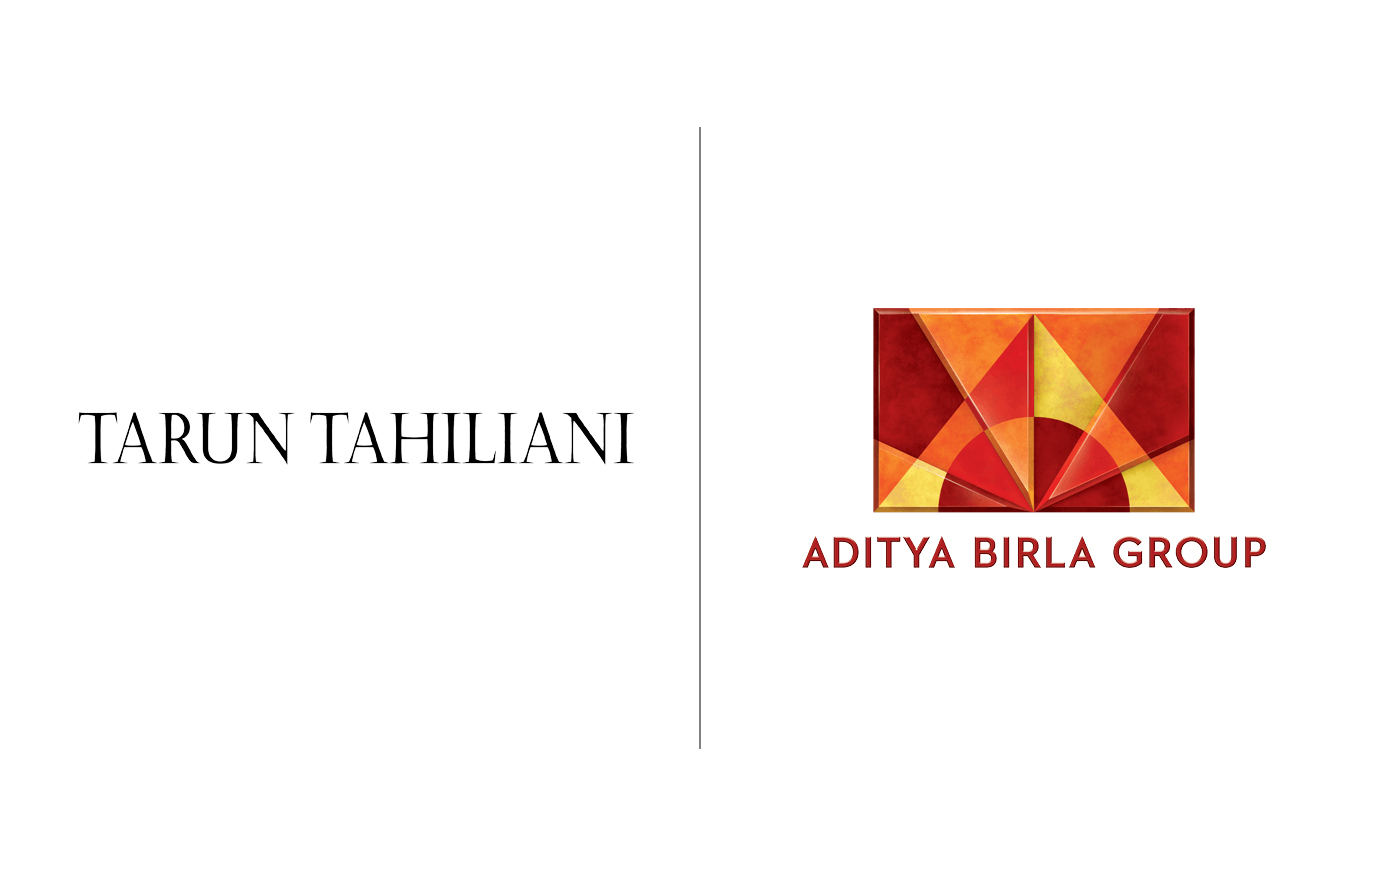 Tarun Tahiliani & Aditya Birla Group